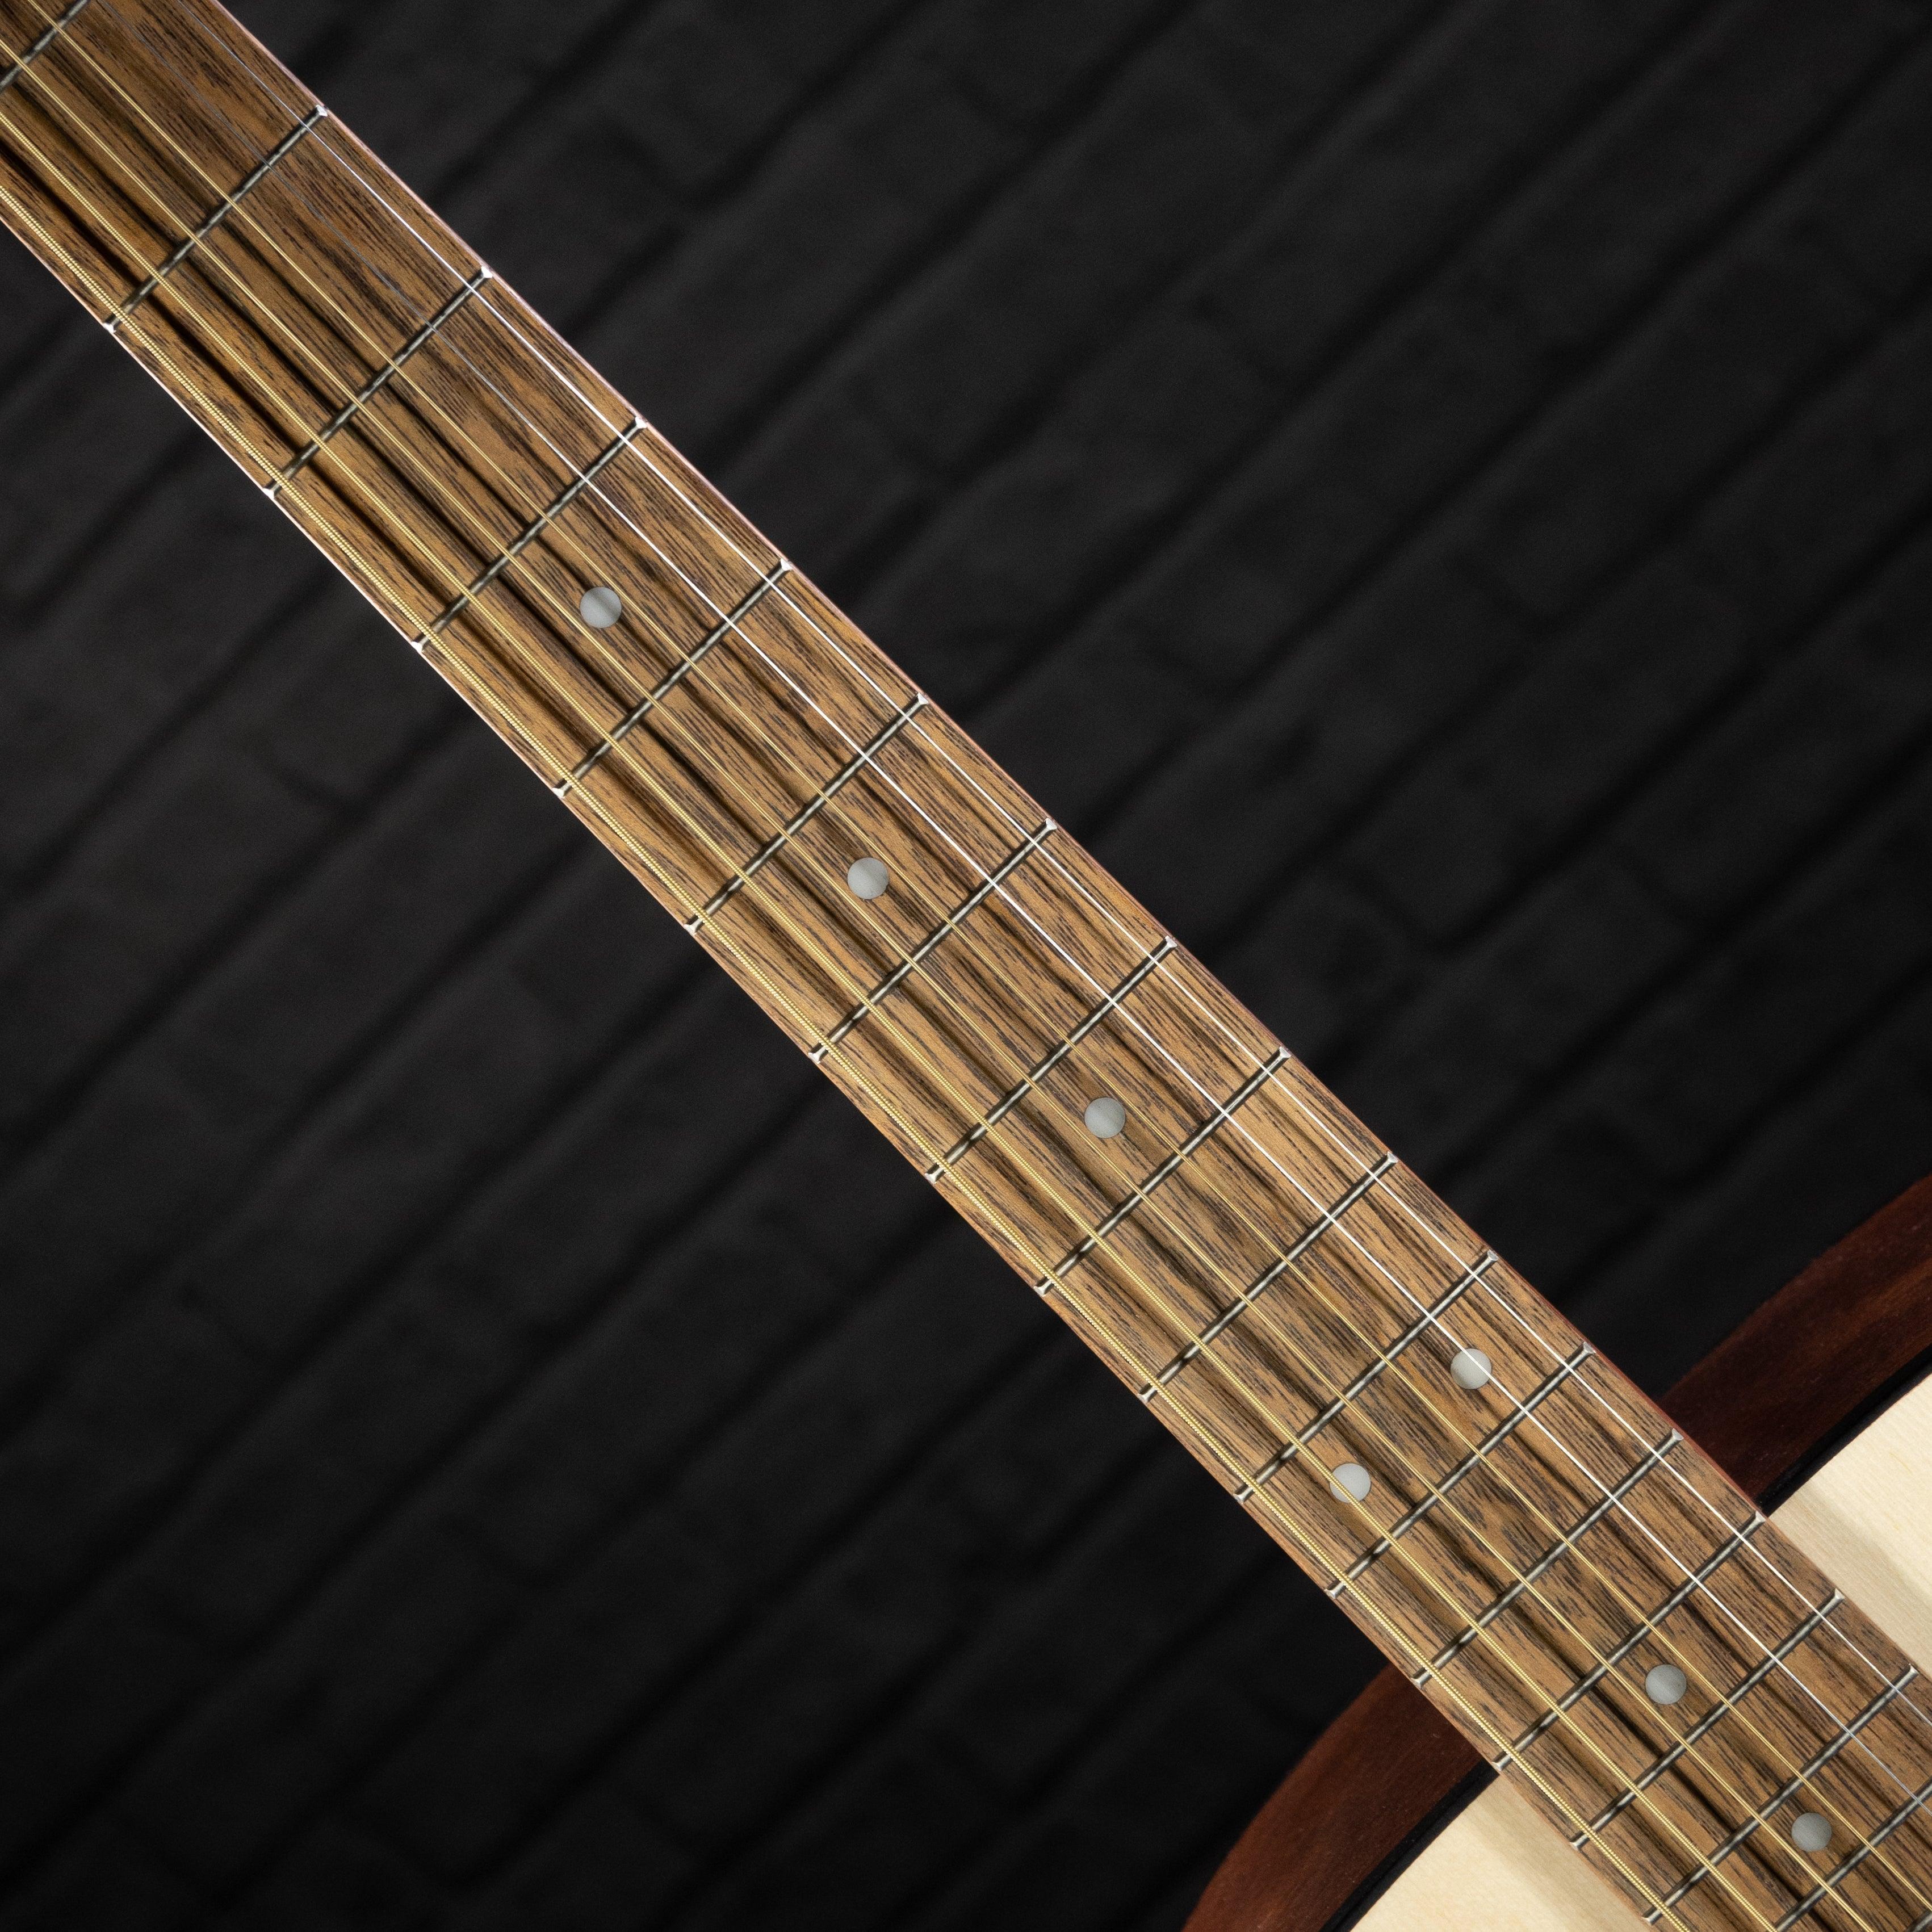 Cort AD810 Standard Series Acoustic Guitar - Impulse Music Co.